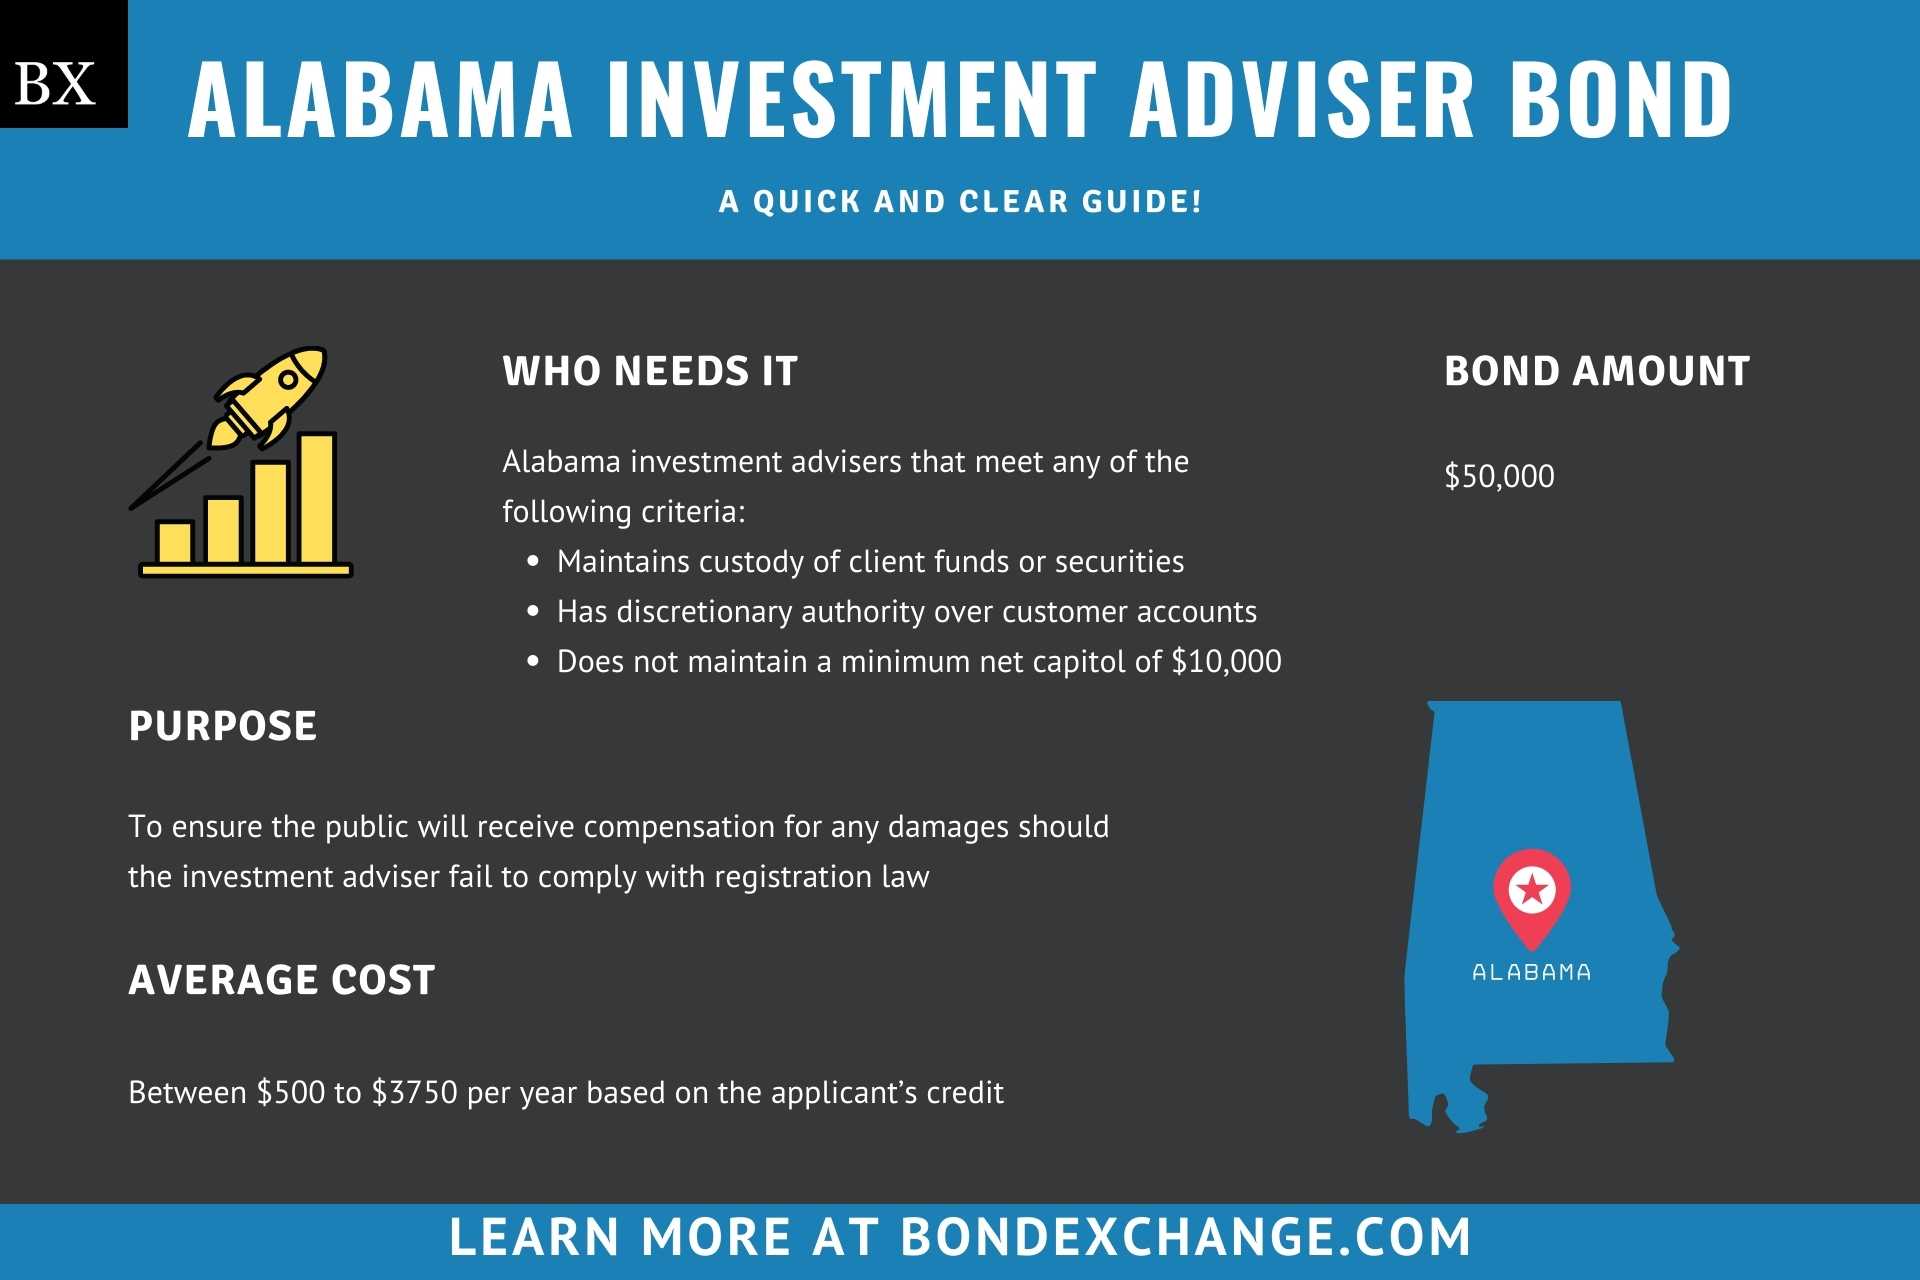 Alabama Investment Adviser Bond